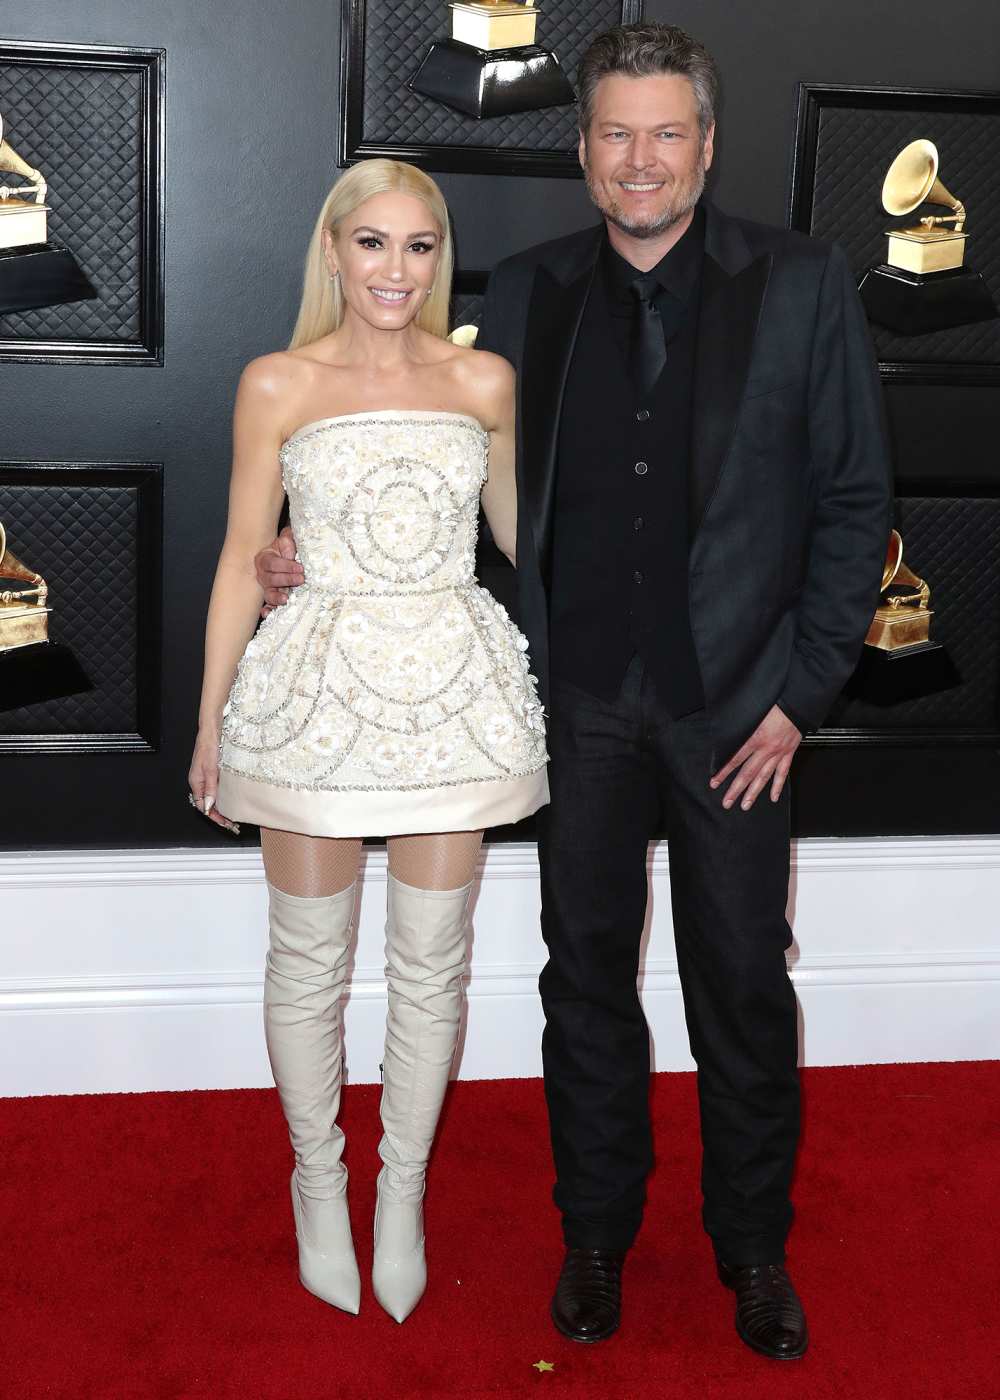 Blake Shelton Jokes About Having Twins With Fiancee Gwen Stefani Grammy Awards